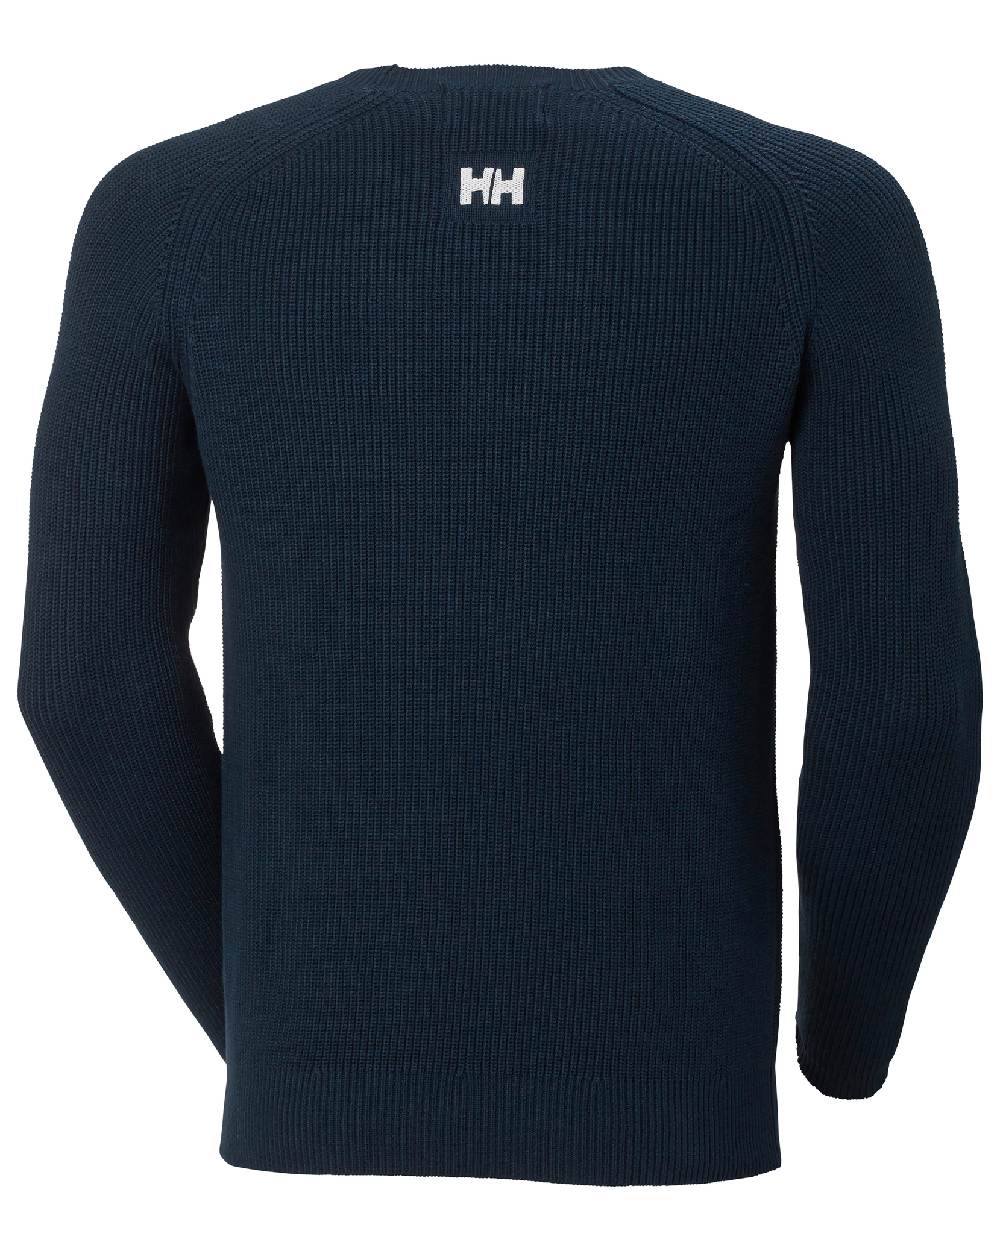 Navy coloured Helly Hansen Mens Dock Ribknit Sweater on white background 